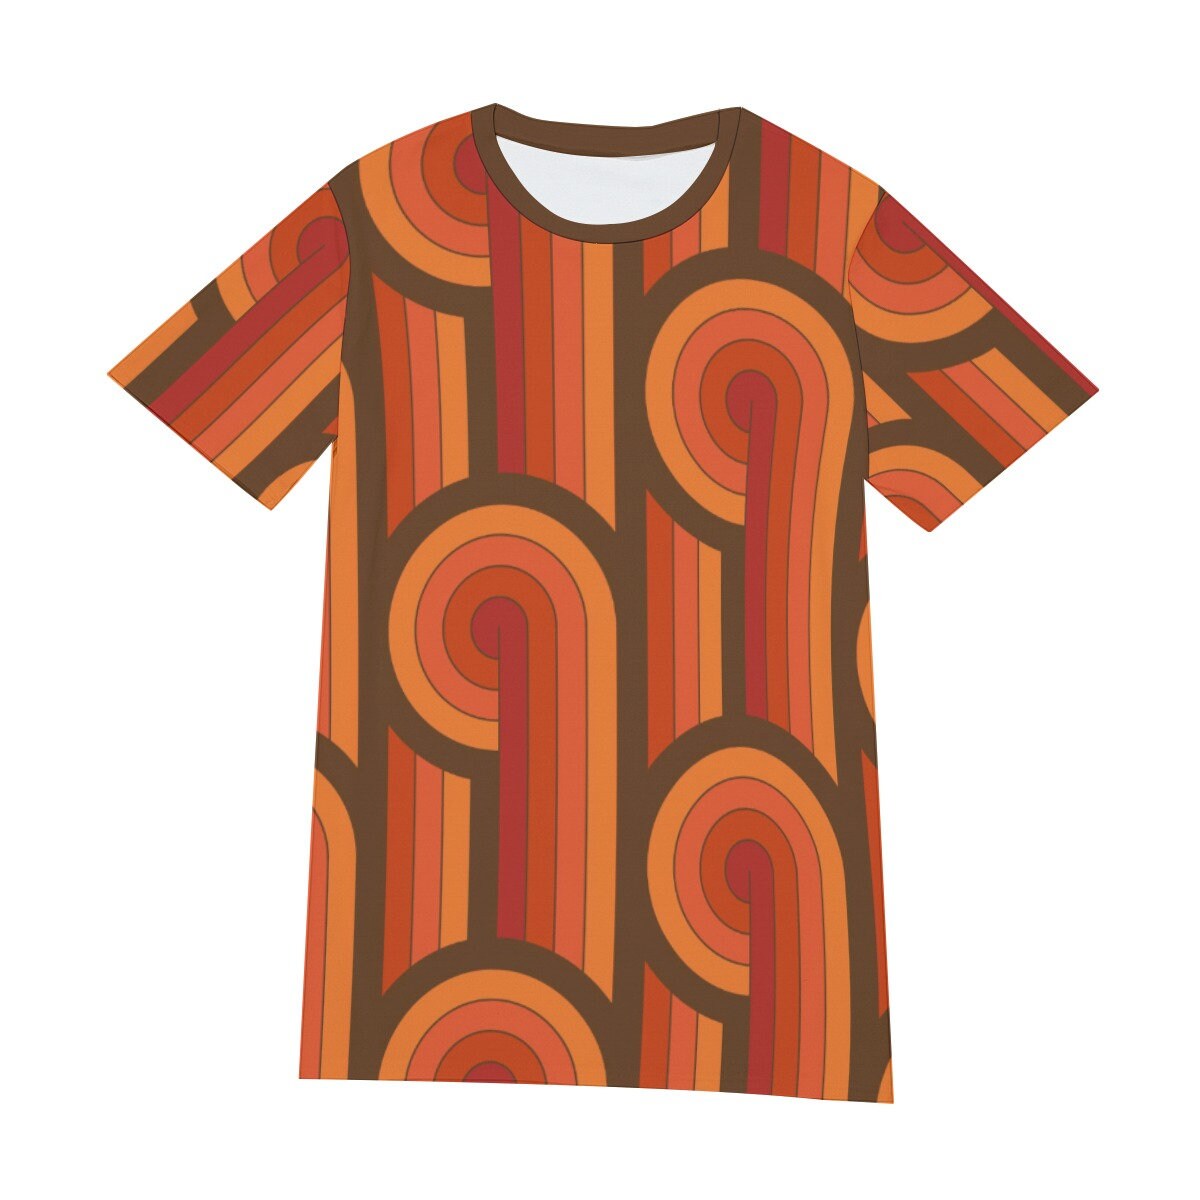 Retro T-Shirt Men, 100% Cotton T-shirt, Retro T-shirt, 60s 70s Style T-Shirt, Vintage Style Shirt, Orange Geometric Tshirt